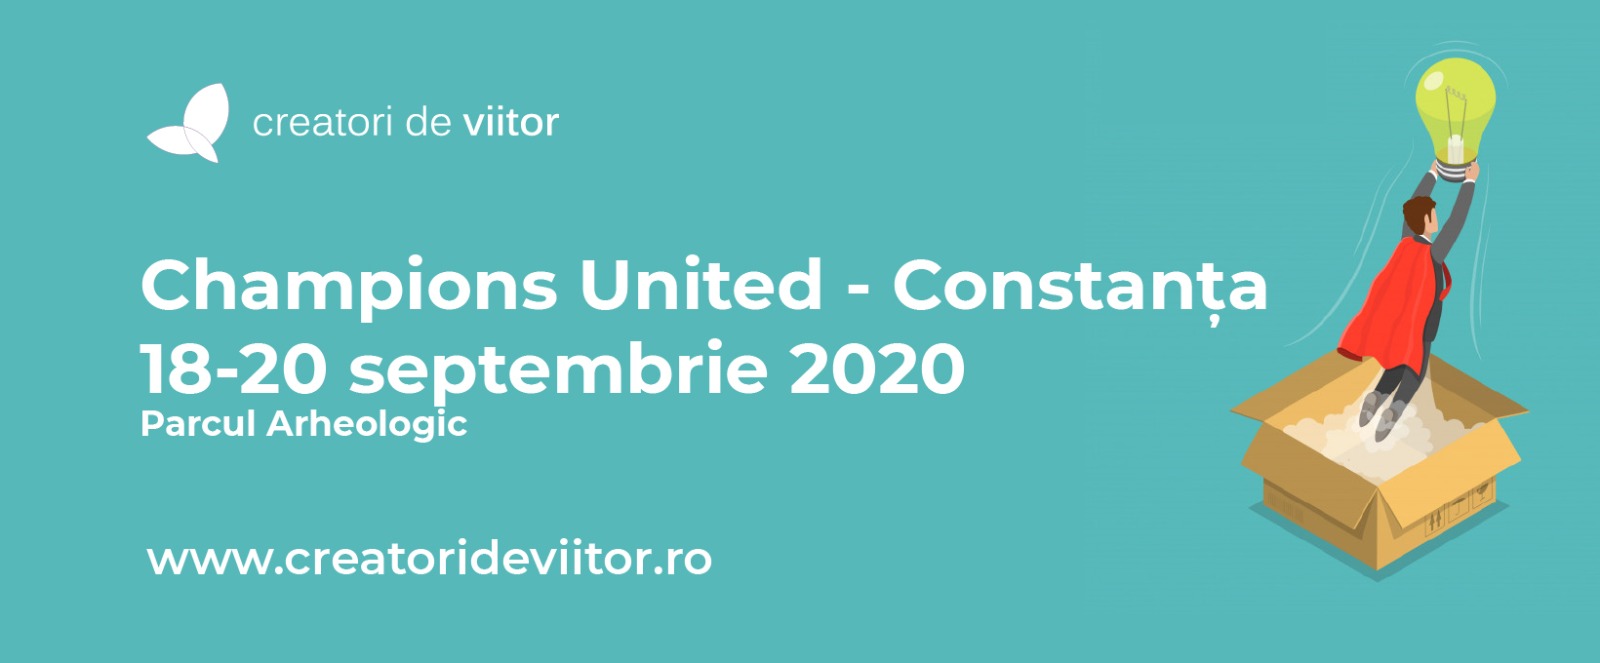 Champions United - Constanta